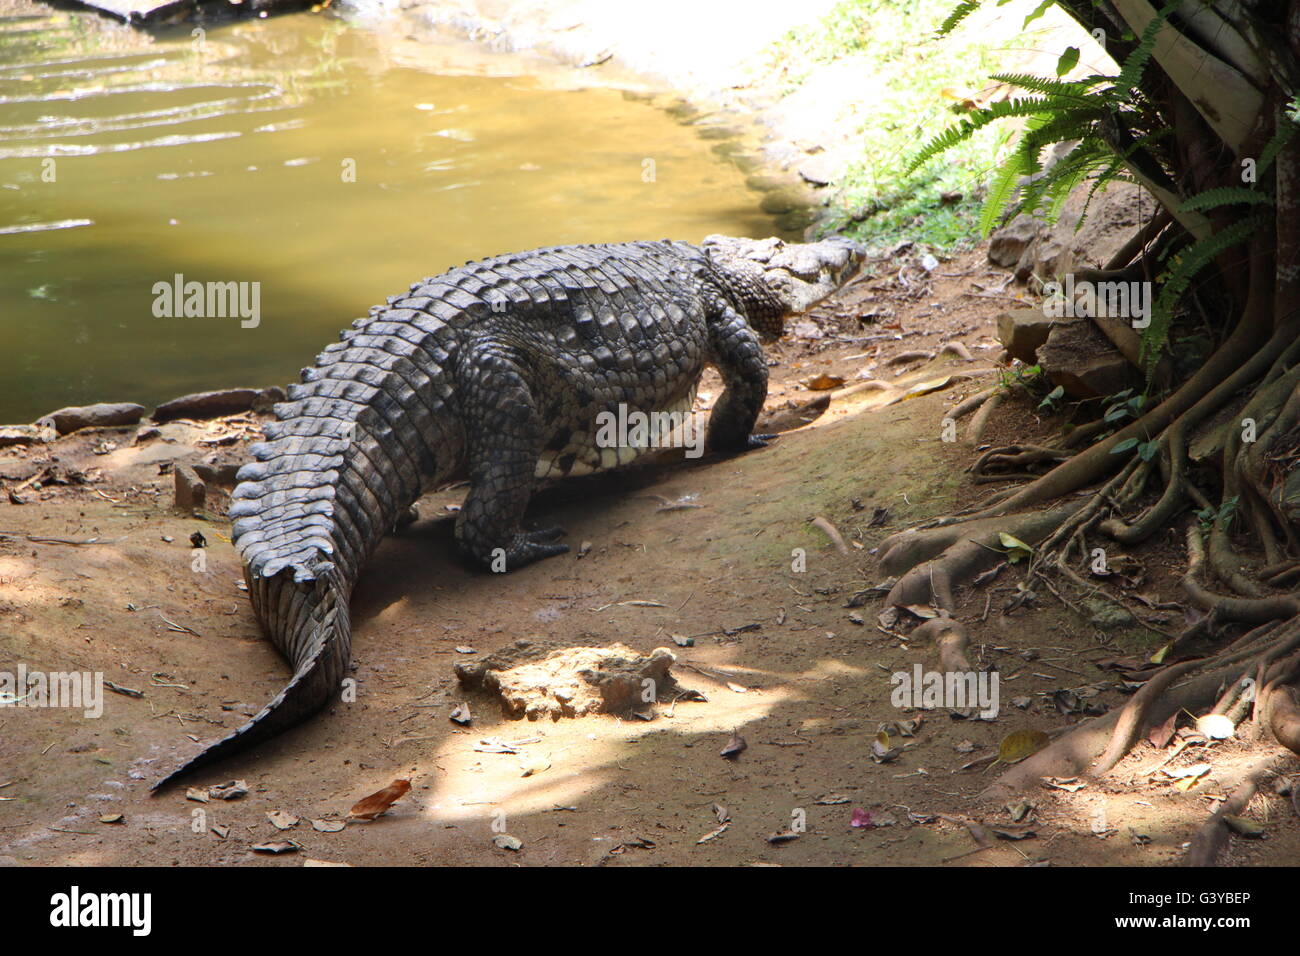 Crocodile at La Vanille Nature Park Mauritius Photo - Alamy